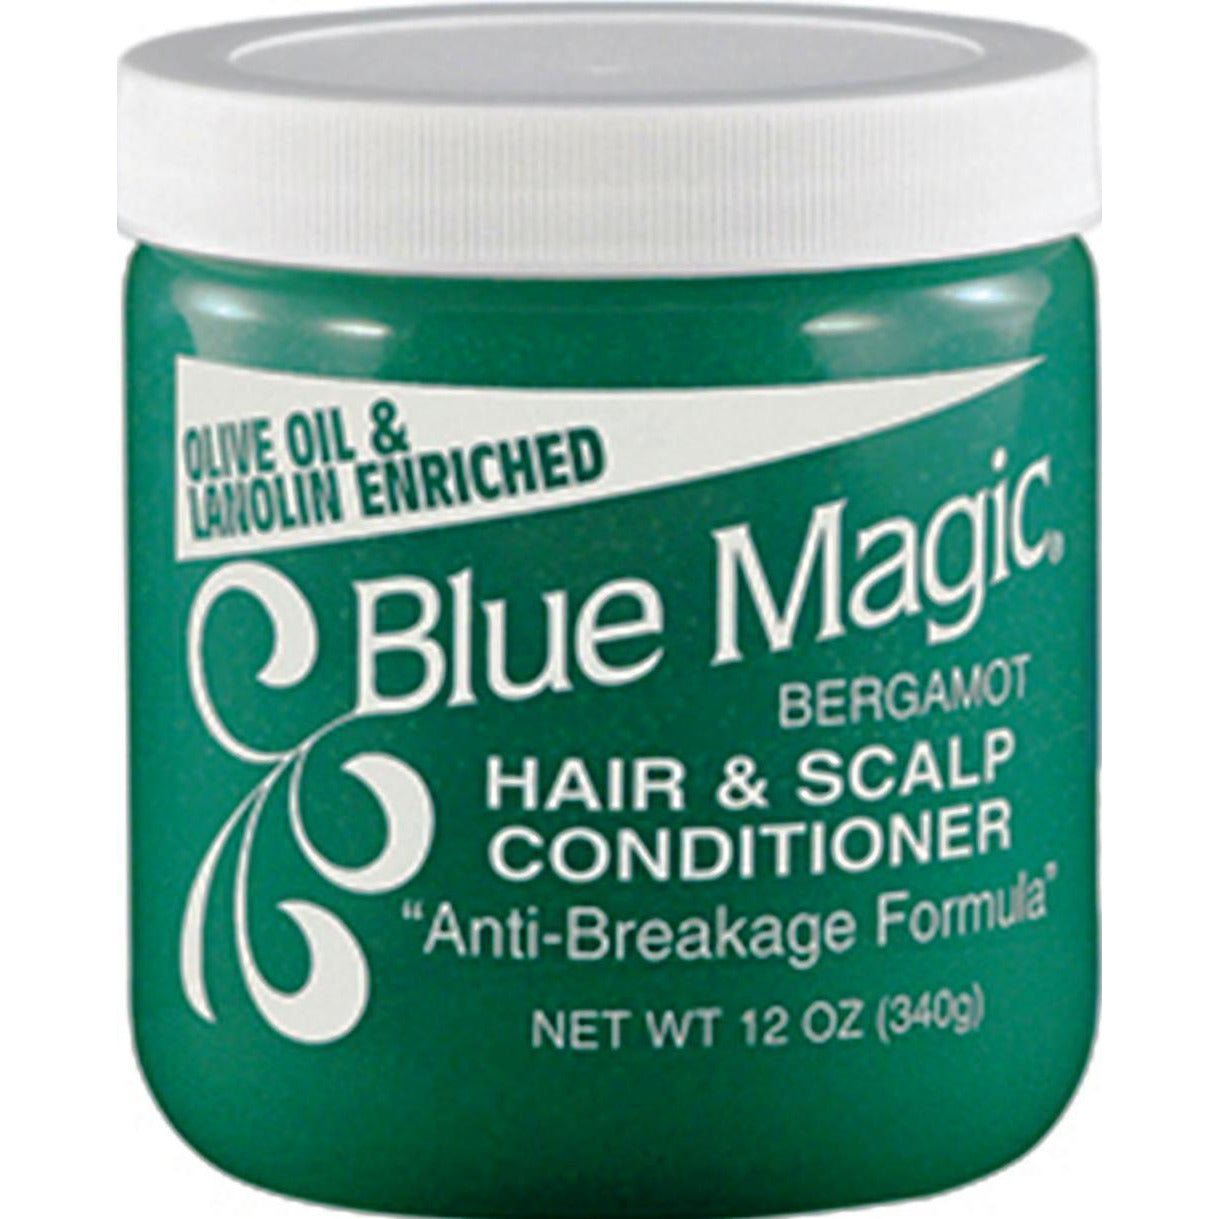 Blue Magic Bergamot Hair & Scalp Conditioner - 12 Oz